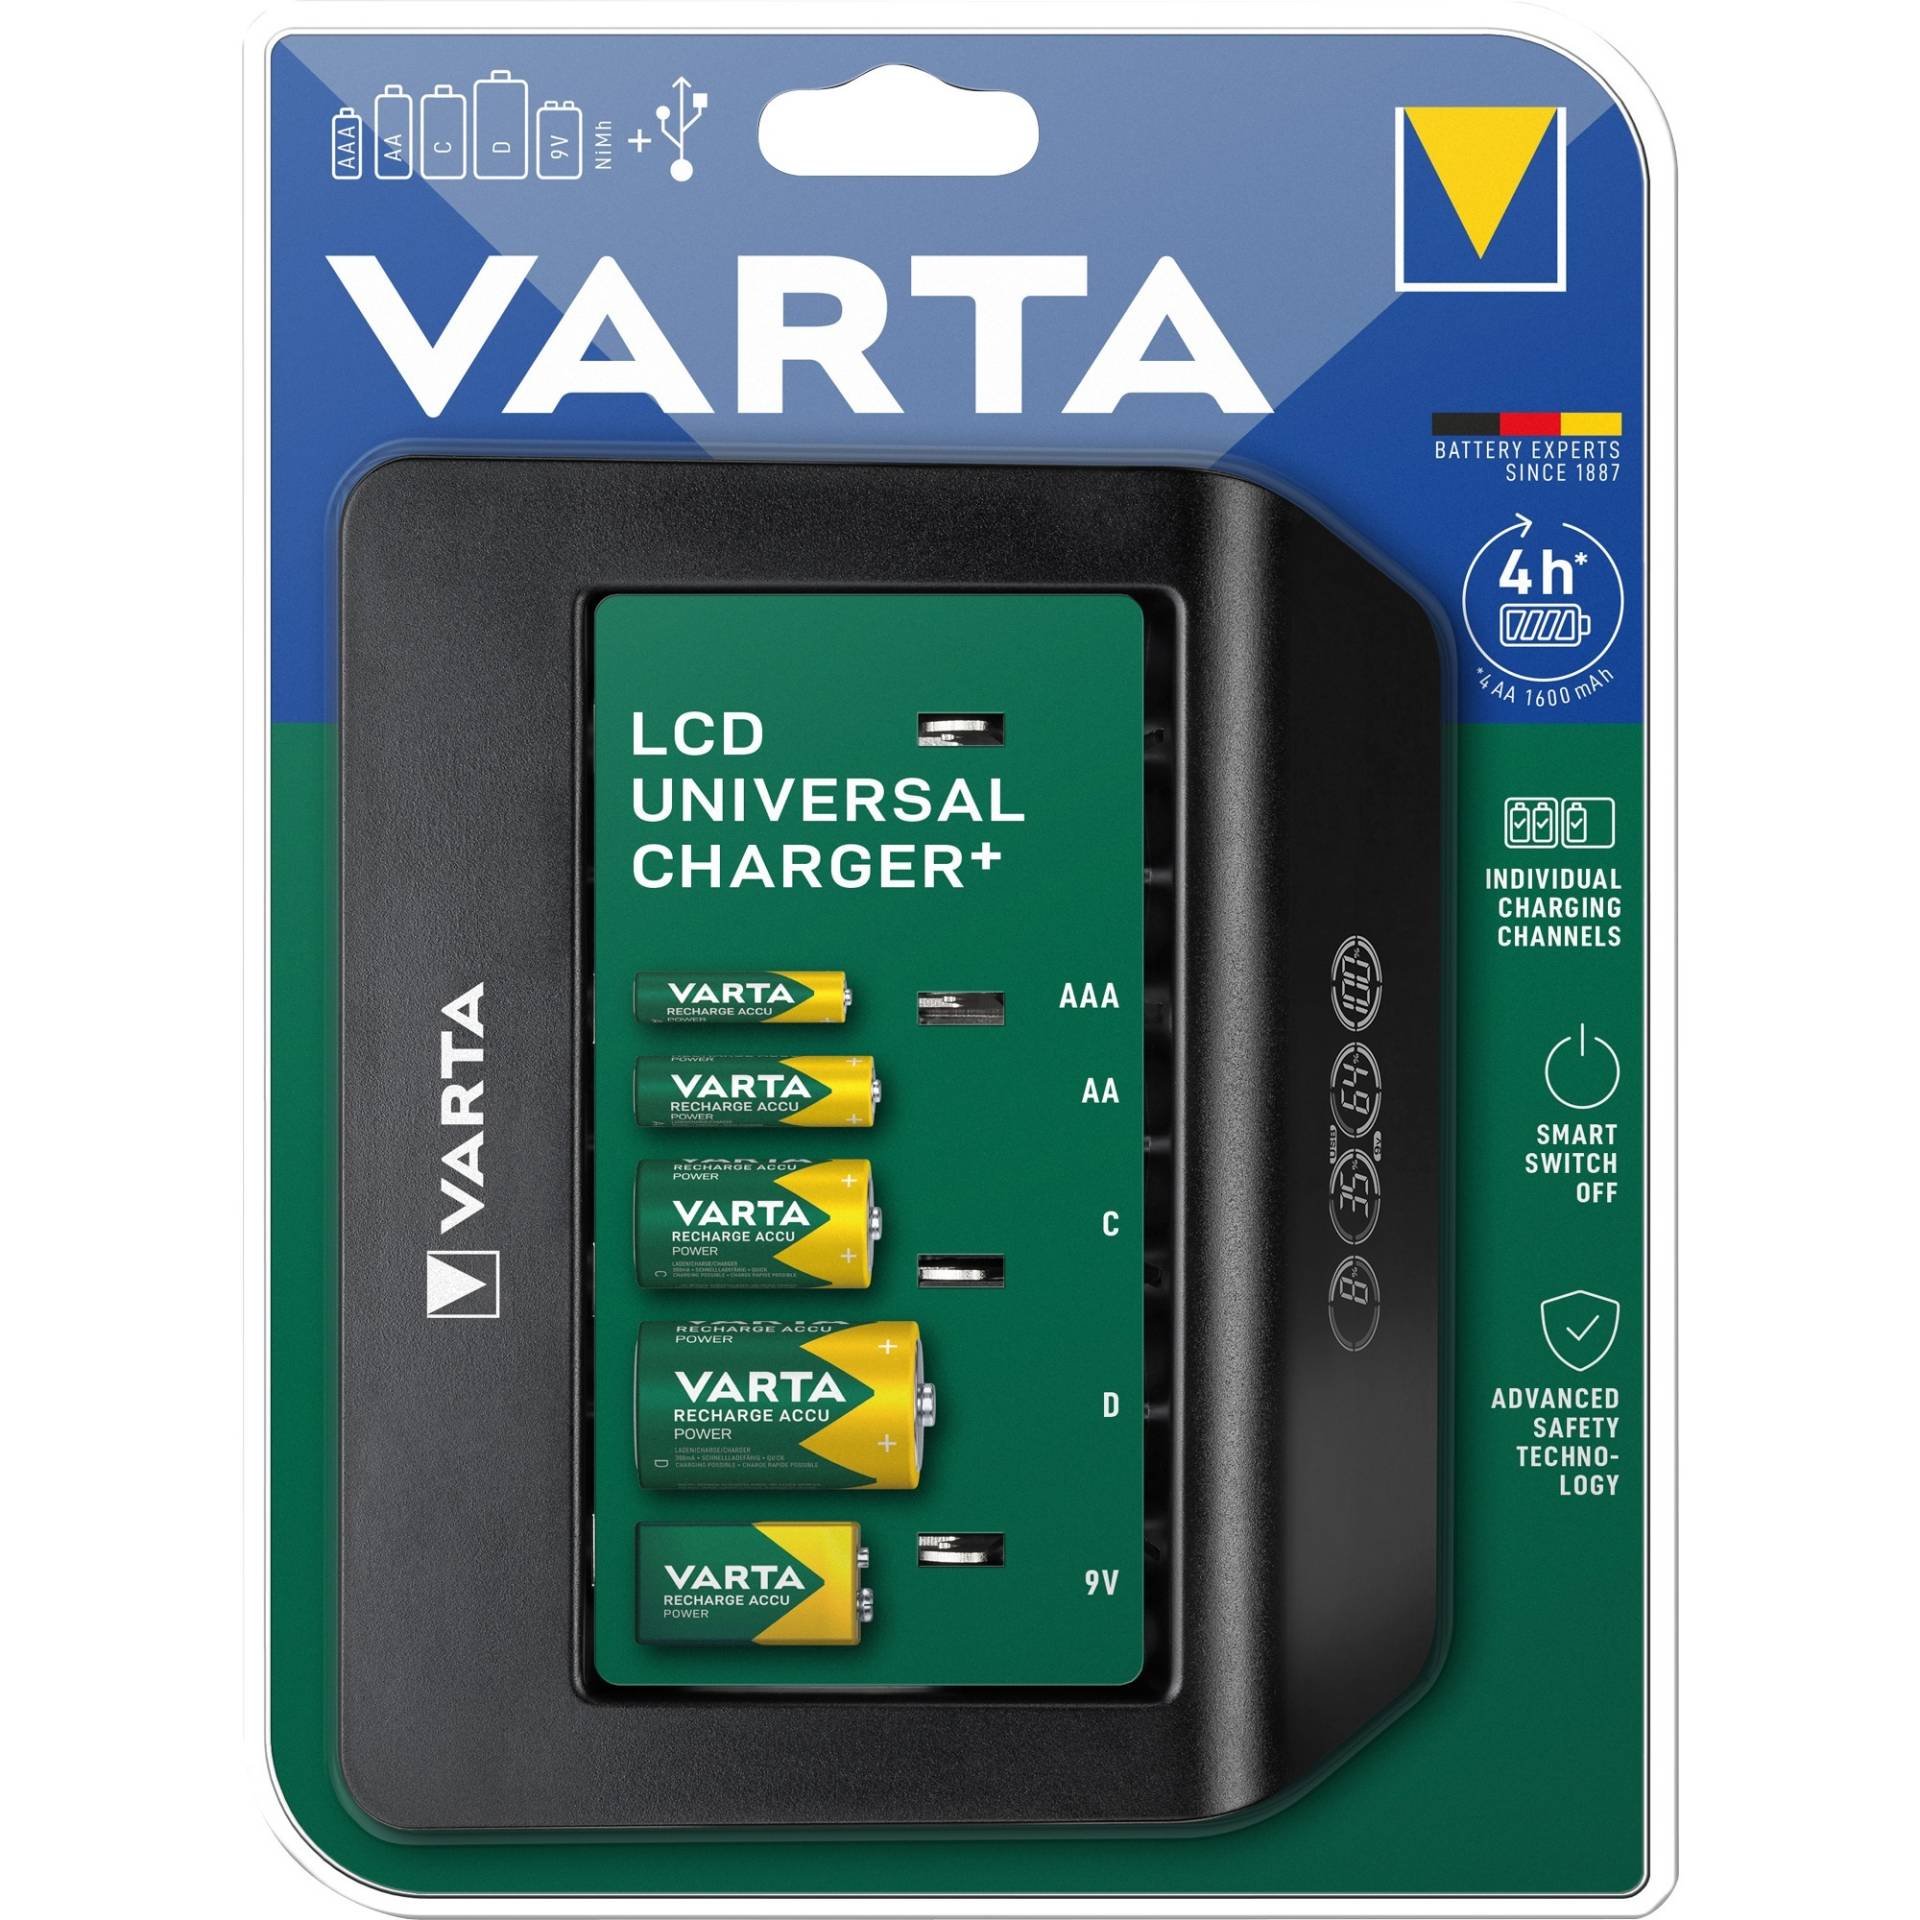 LCD Universal Charger+, Ladegerät von Varta